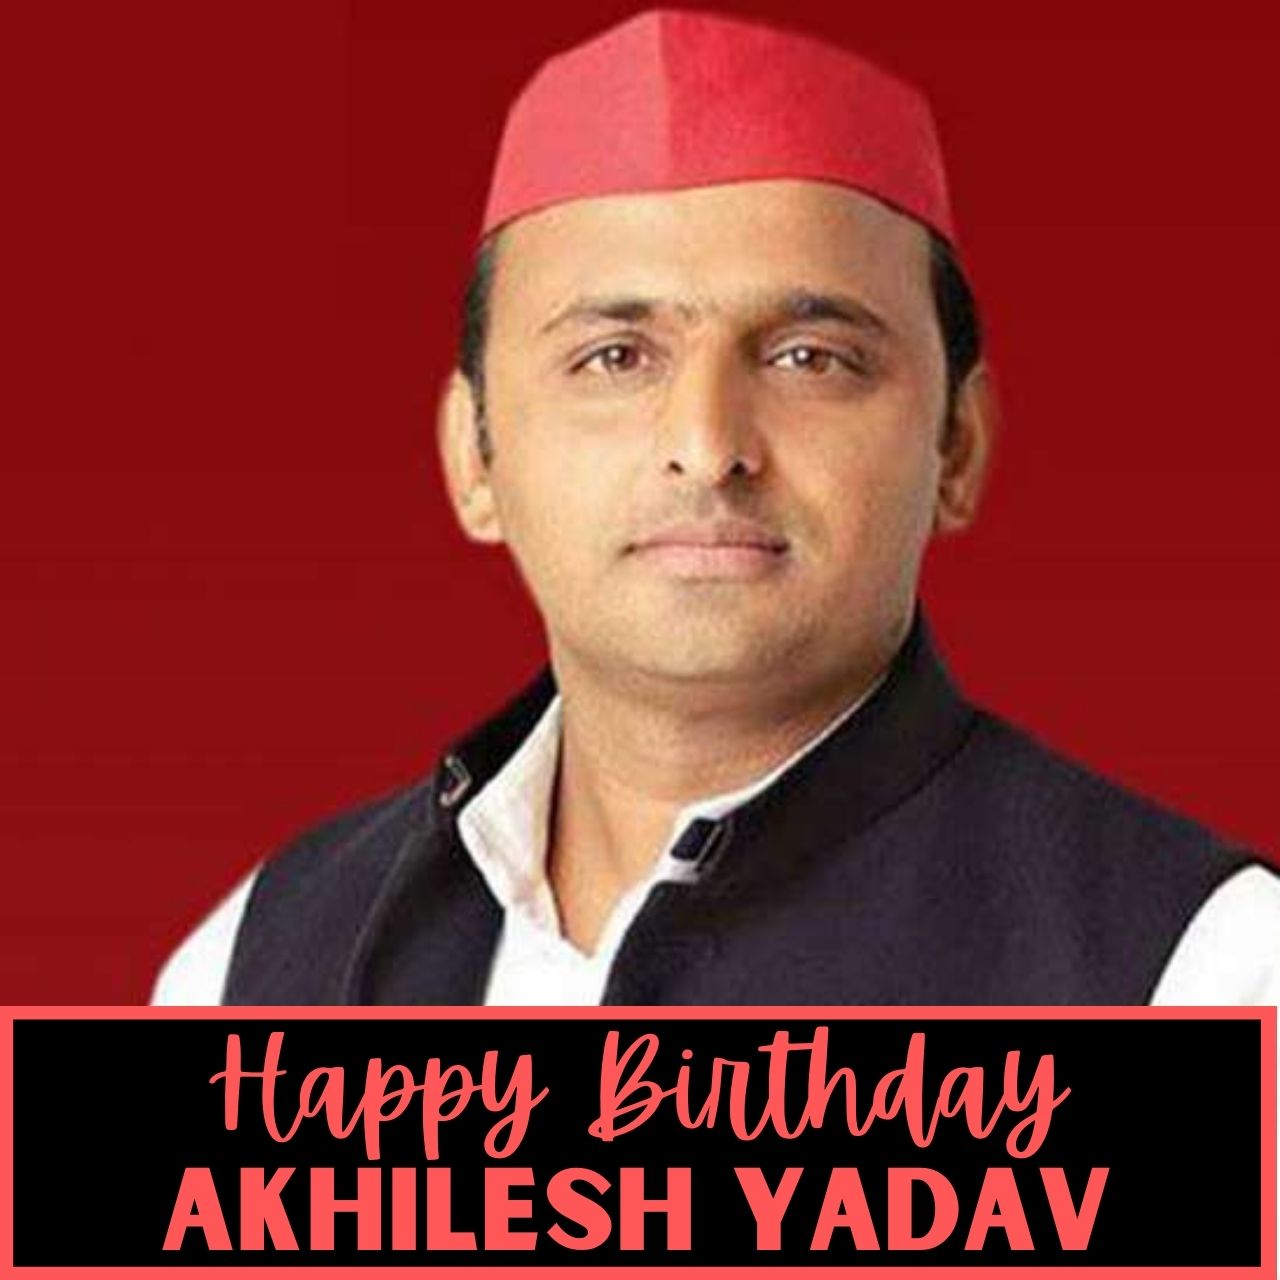 Happy Birthday Akhilesh Yadav Wishes, Poster, Photo (pic), Image, and Status to greet SP Leader